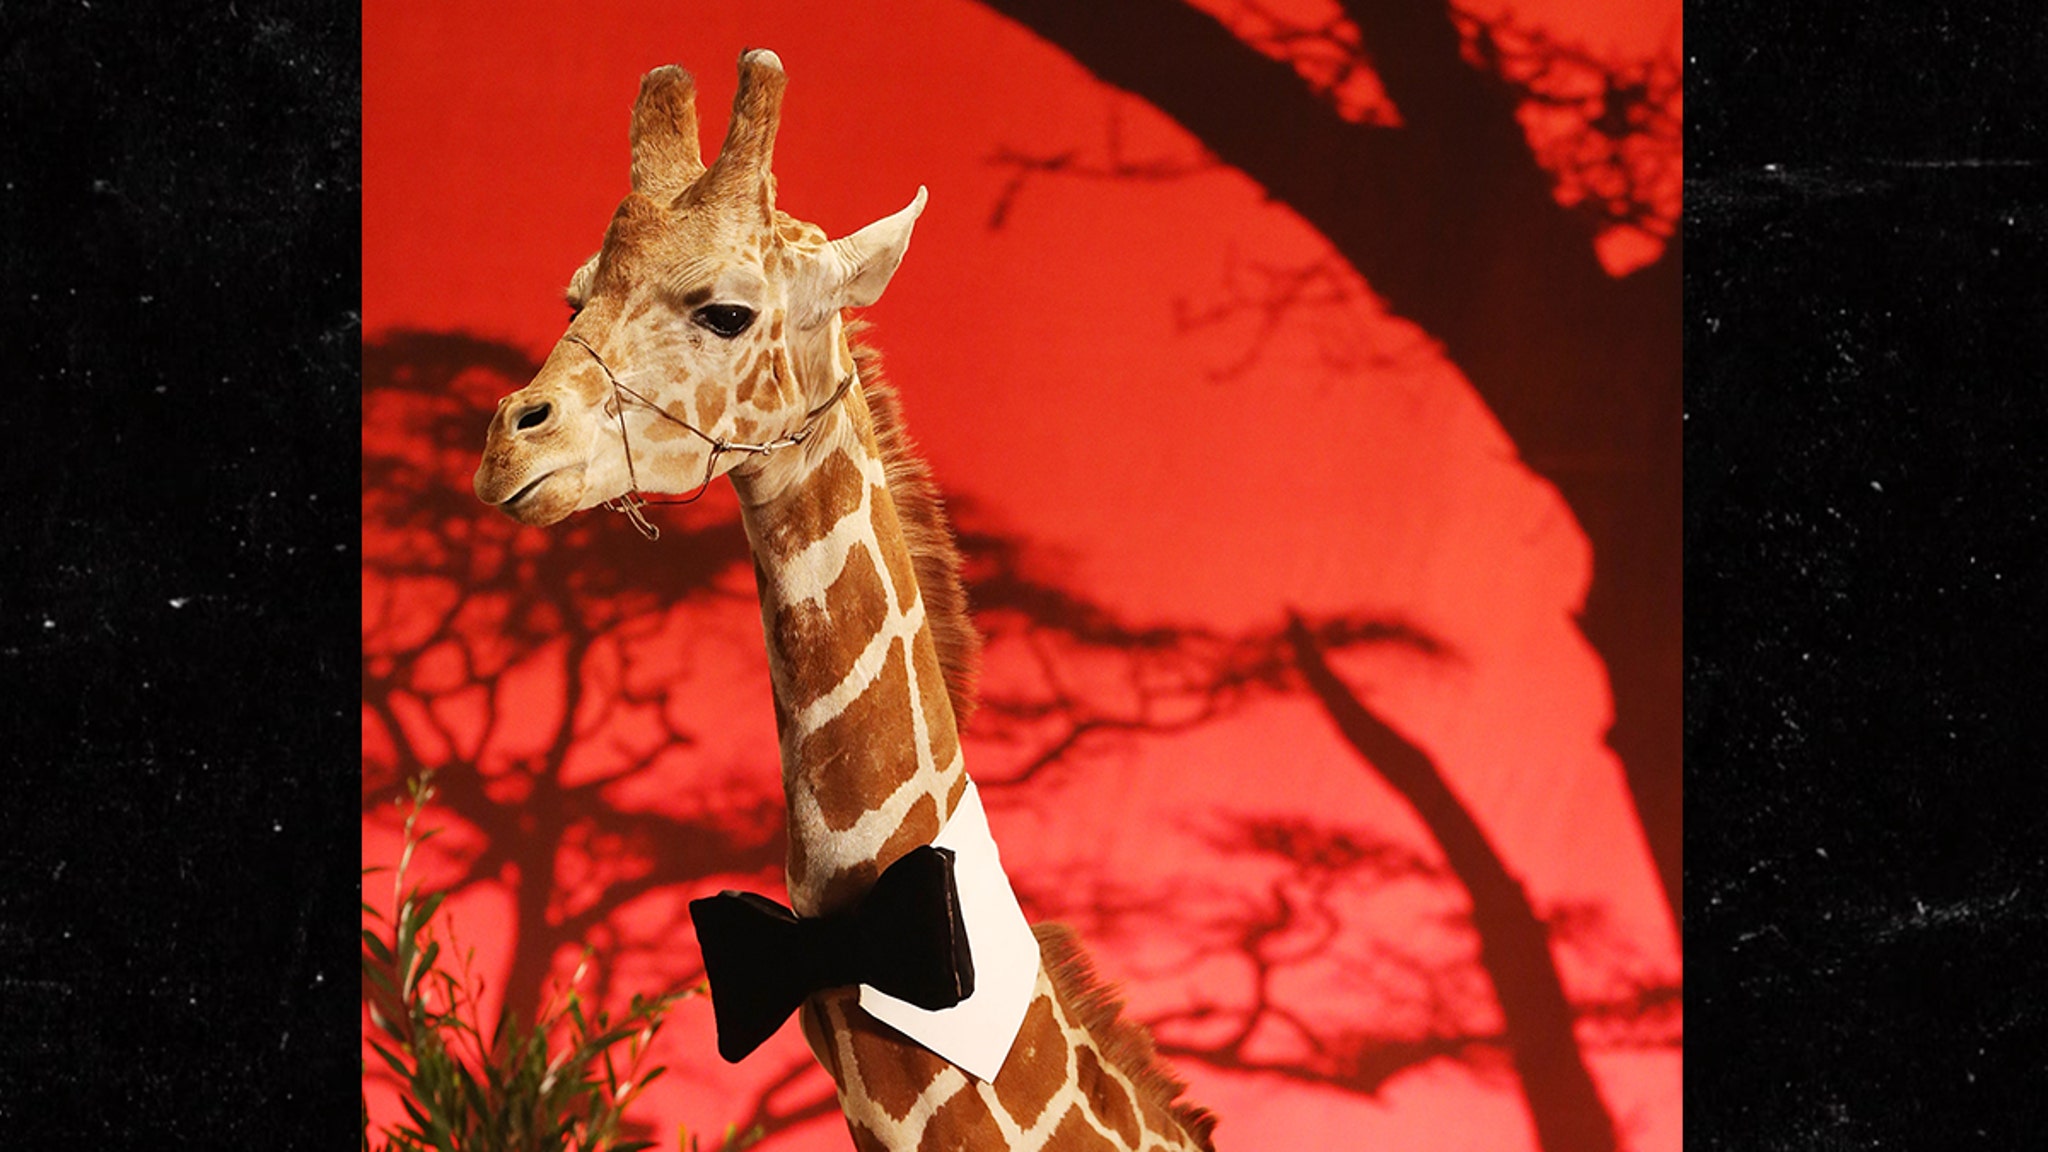 Stanley, the giraffe as evidence at Malibu wine safaris